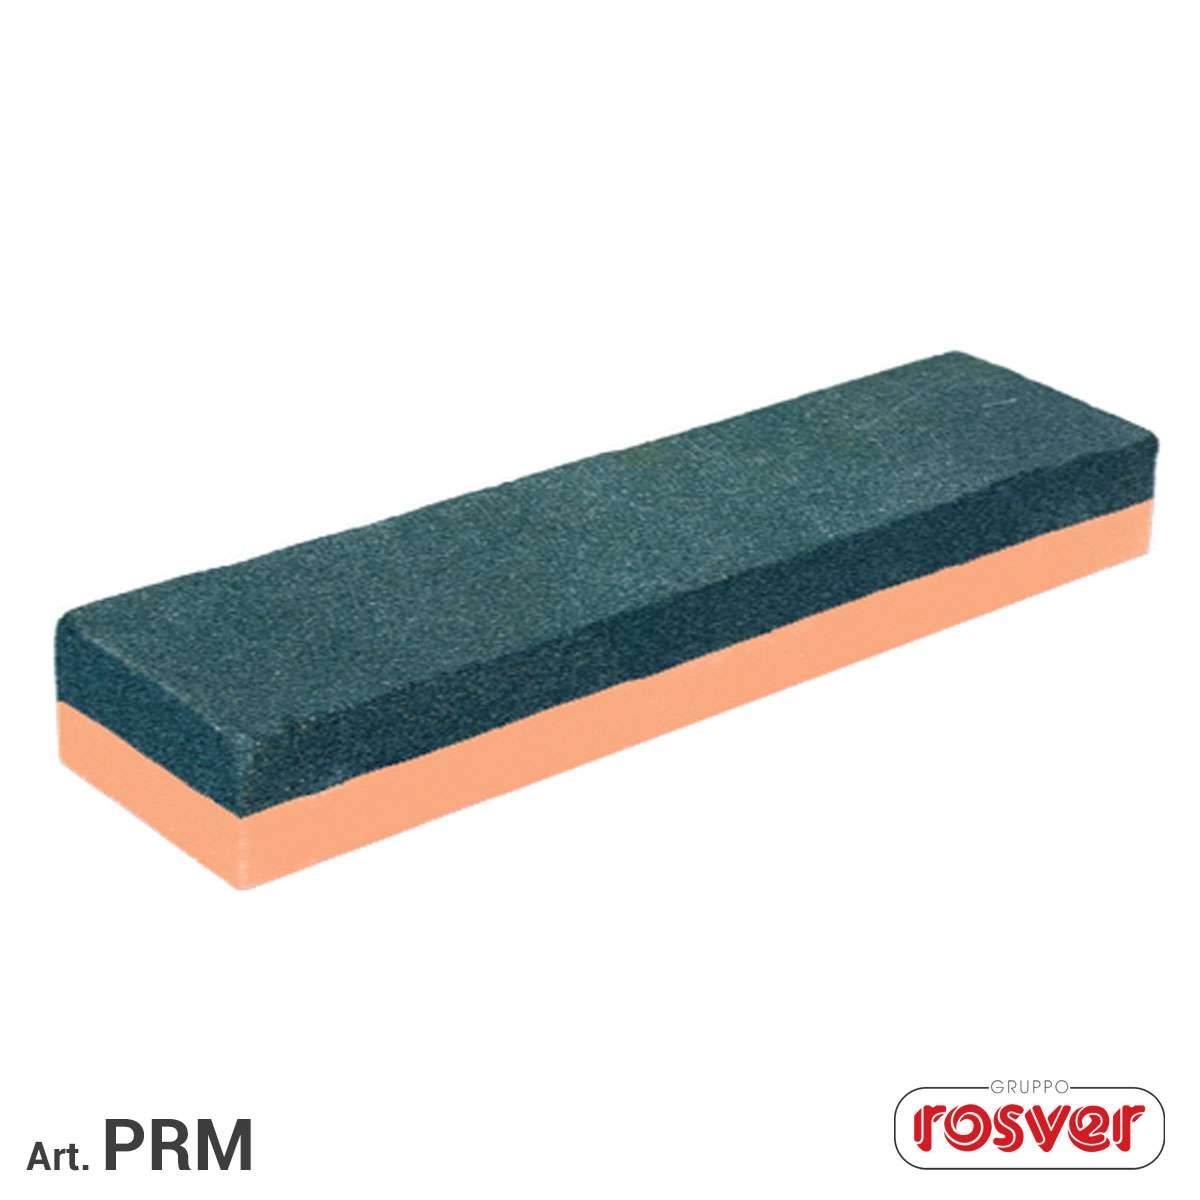 Abrasive Files - 2 Layer Rectangles Rosver PRM Corundum - Conf.1pz